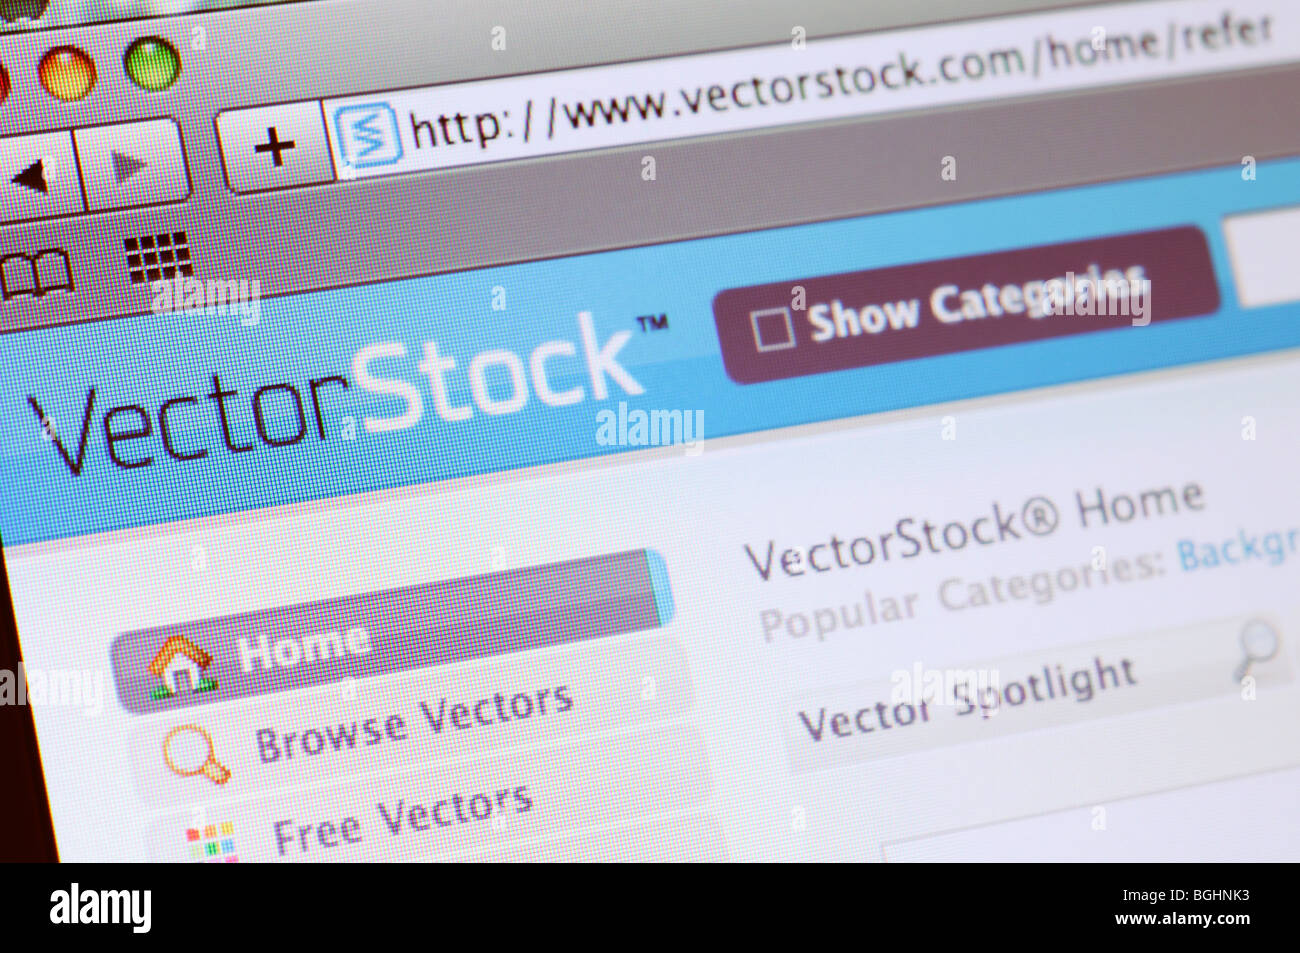 VectorStock image agency website Stock Photo